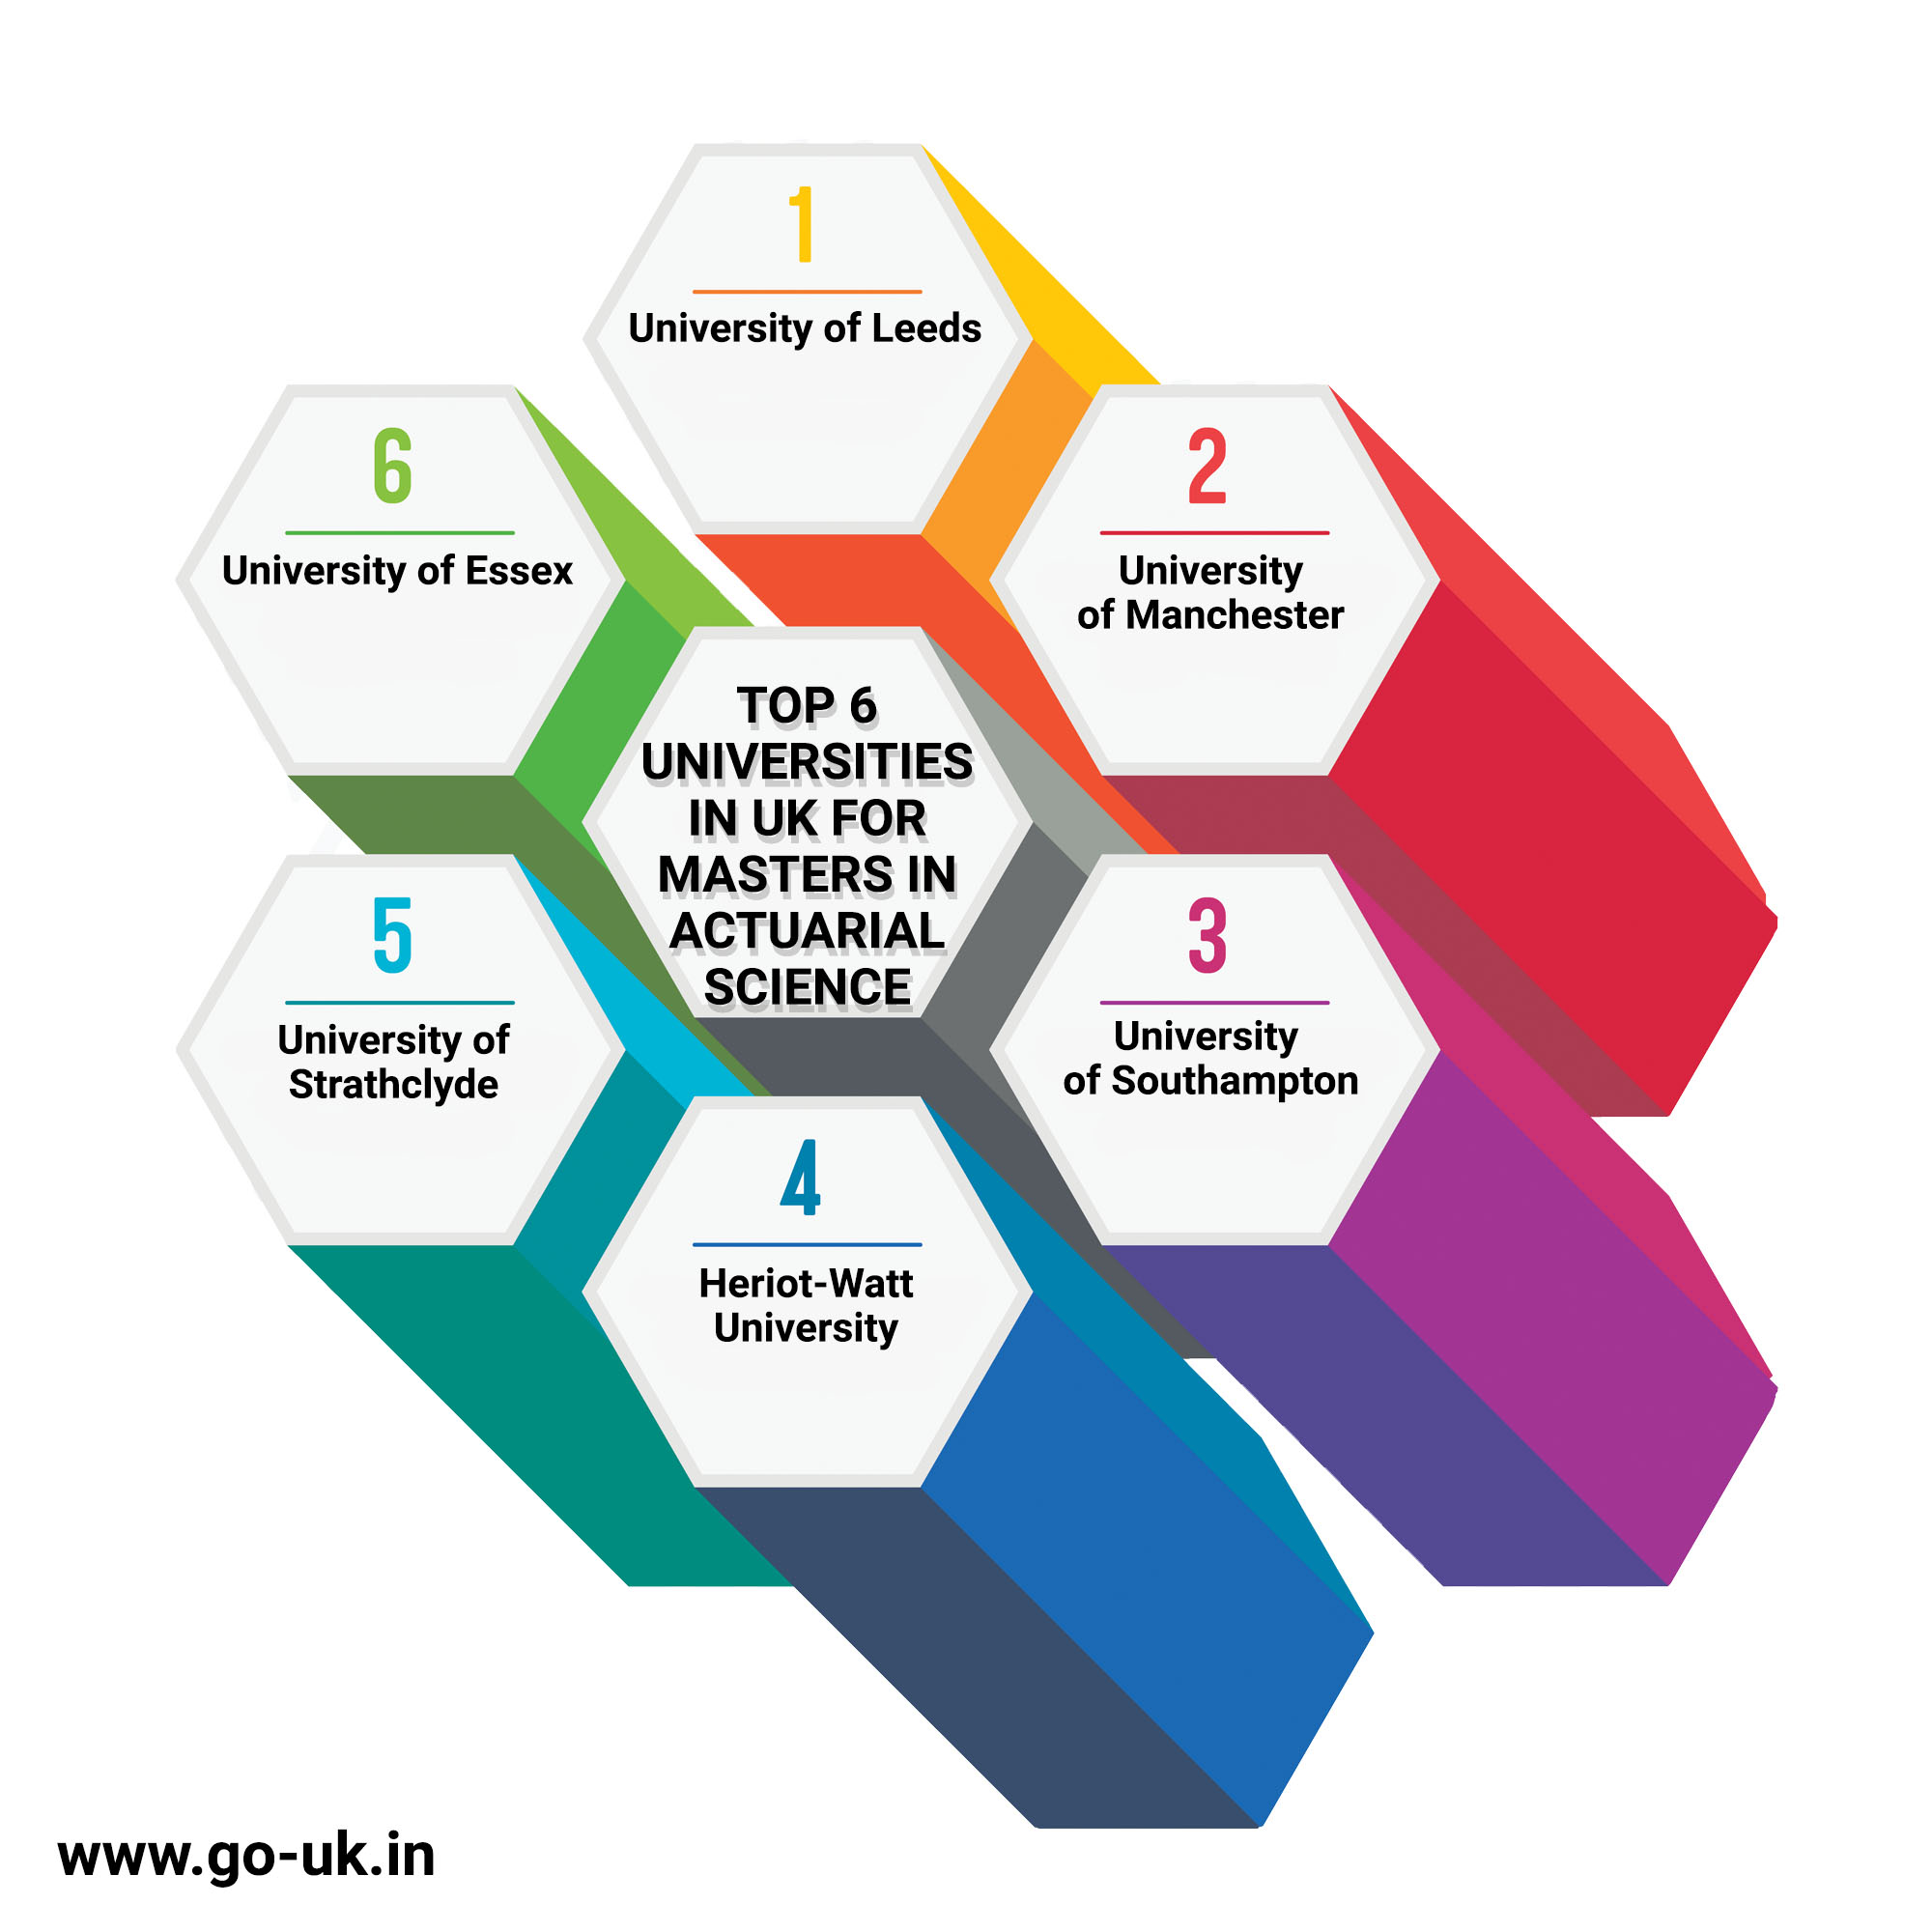 Top 6 Universities in UK for Masters in Actuarial Science